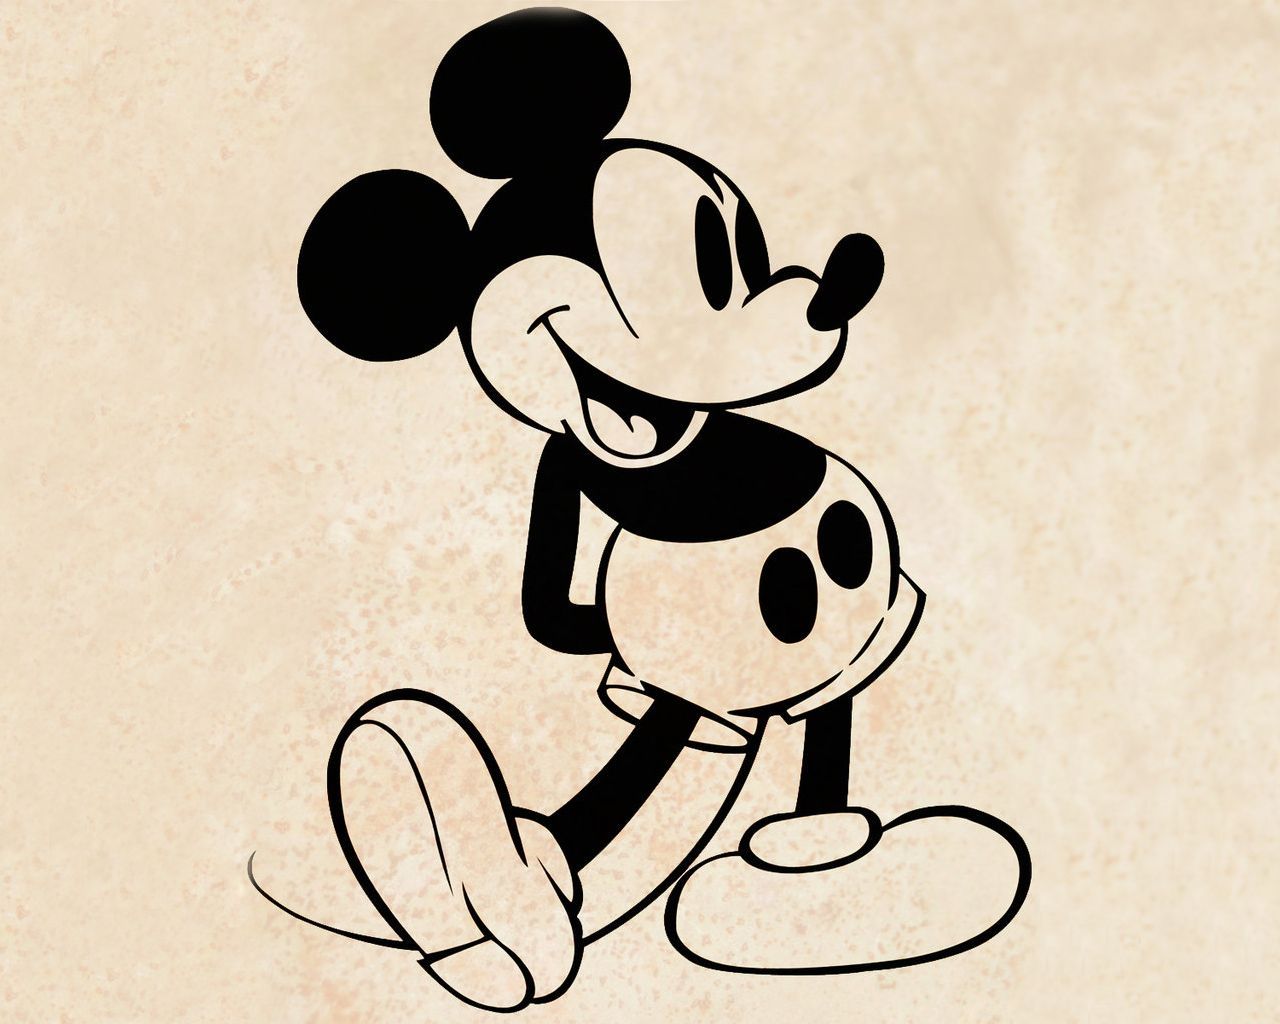 Mitomania dc: Mickey Mouse Mickey Mouse fondo de pantalla 34412161 fanpop